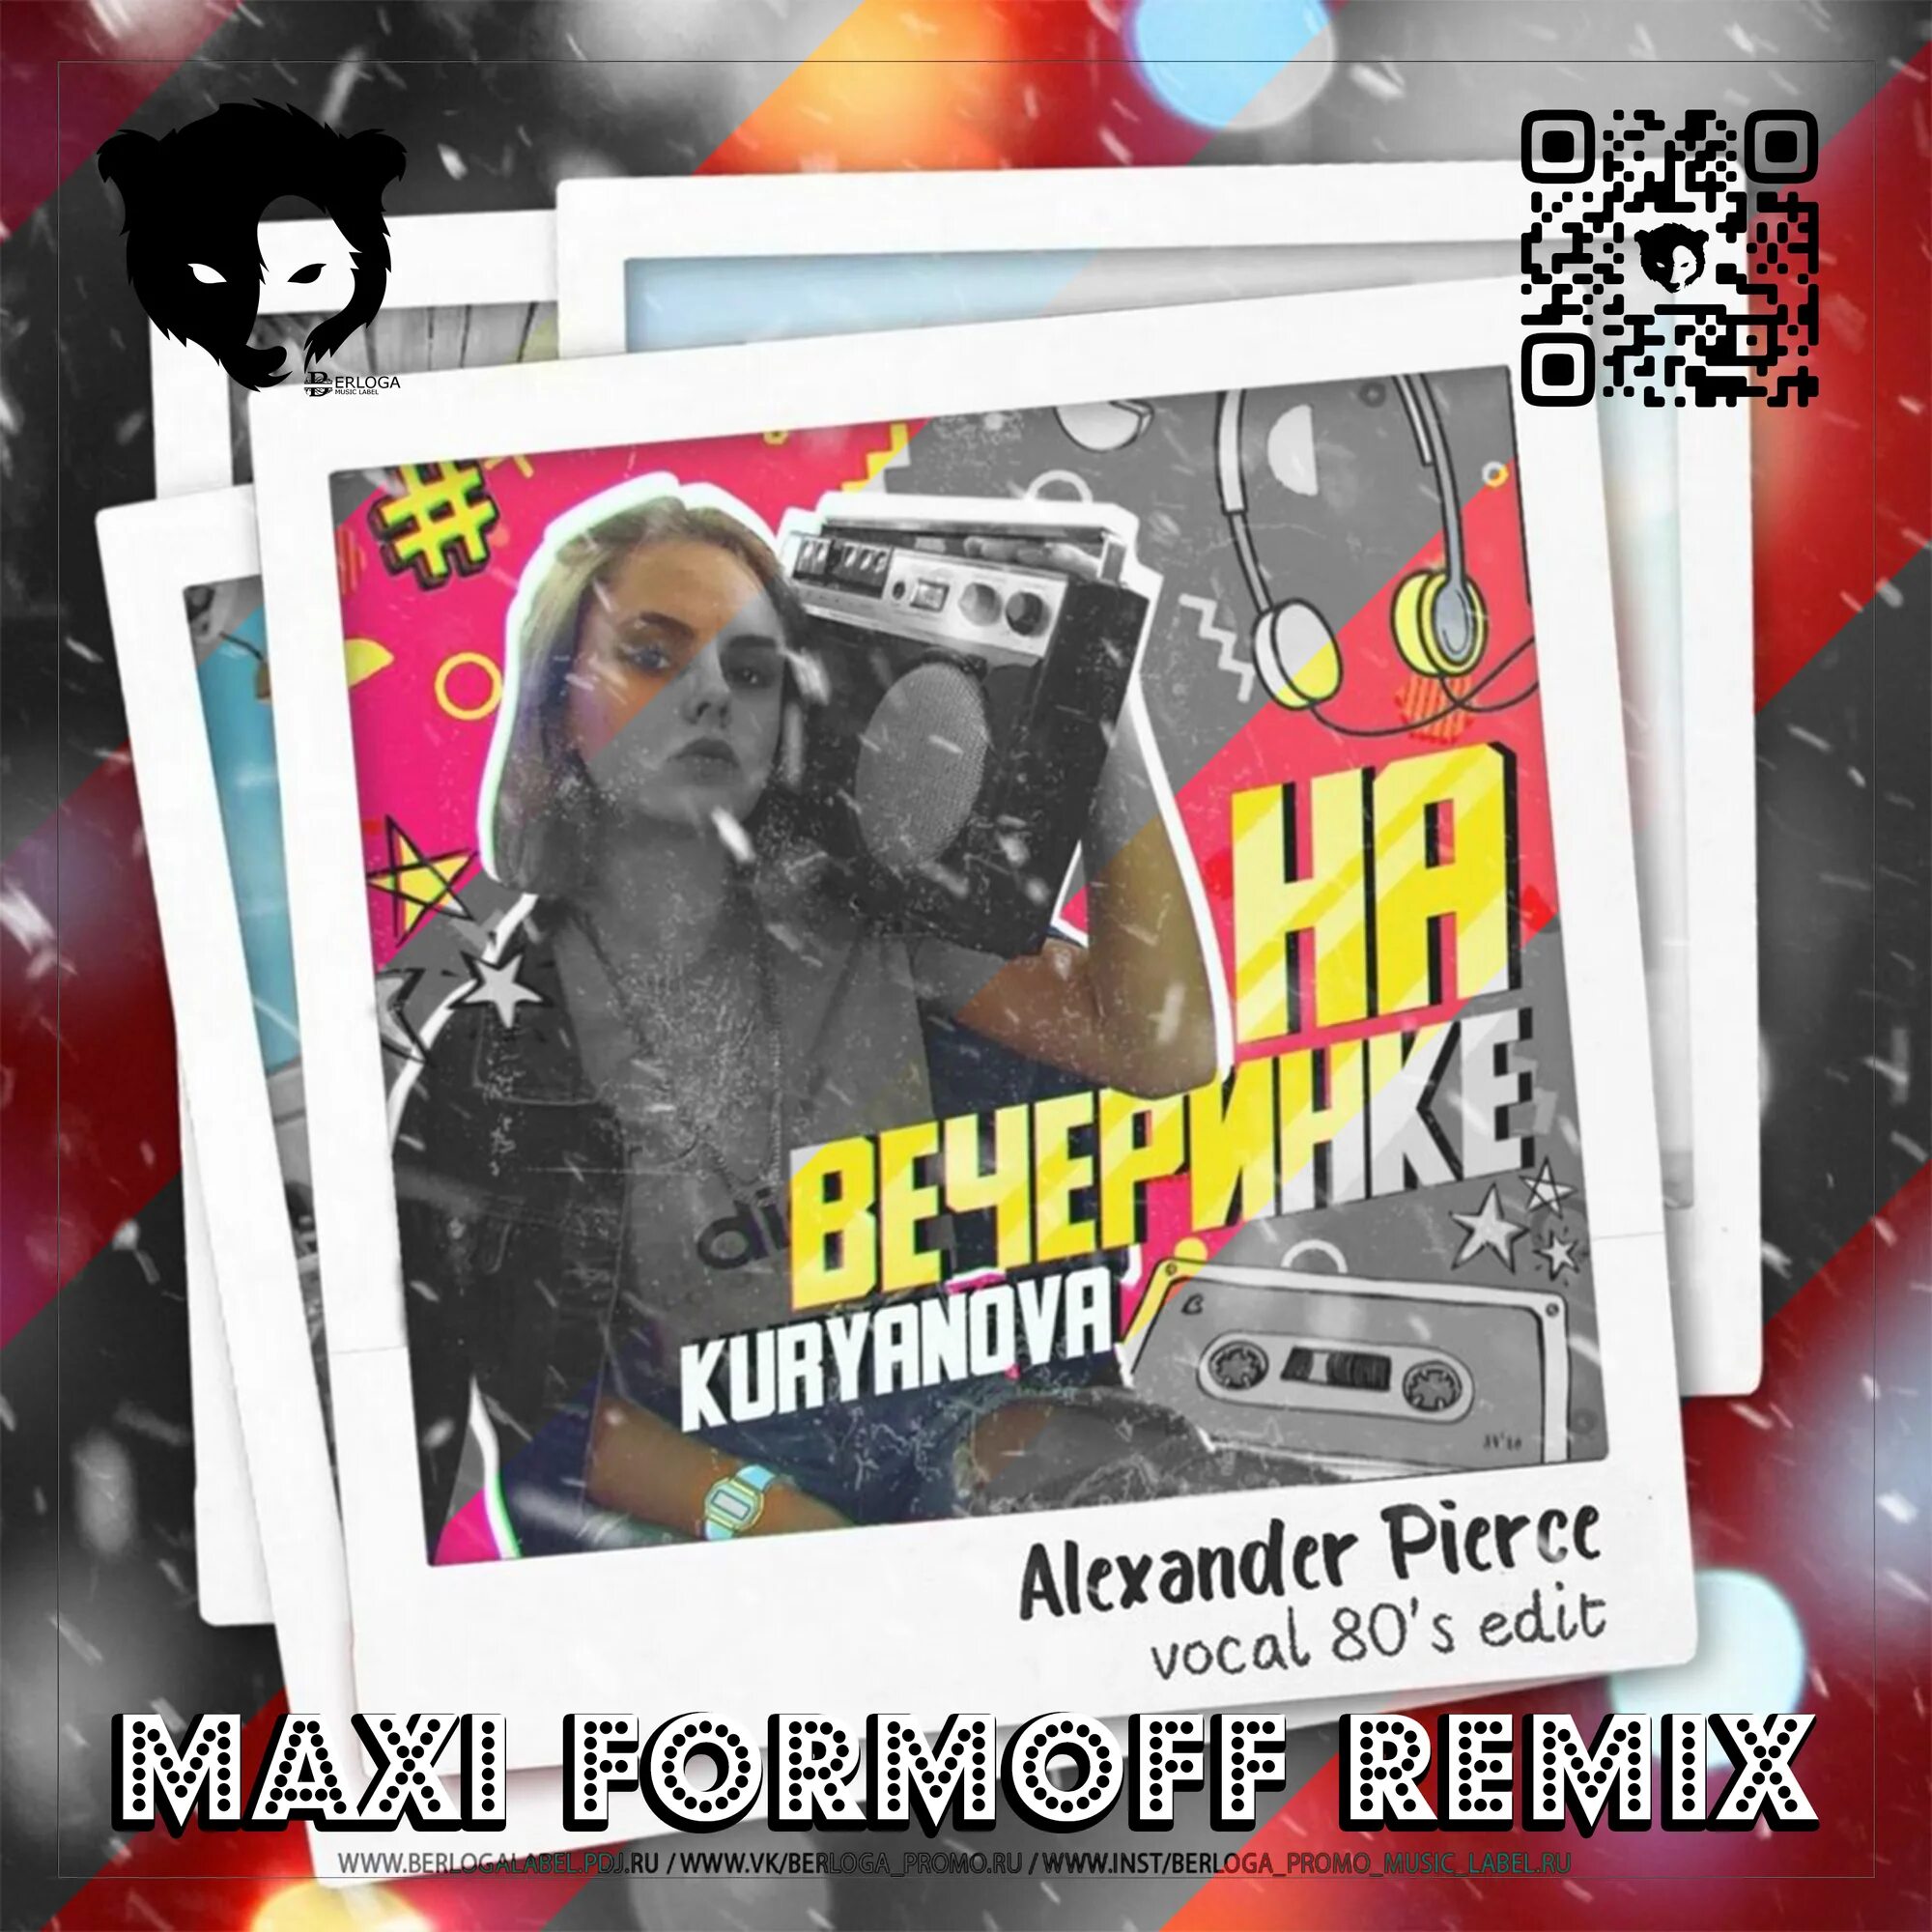 Alexander pierce adil retro remix. Kuryanova, Alexander Pierce. Maxi FORMOFF. Alexander Pierce Remix. Kuryanova на вечеринке.